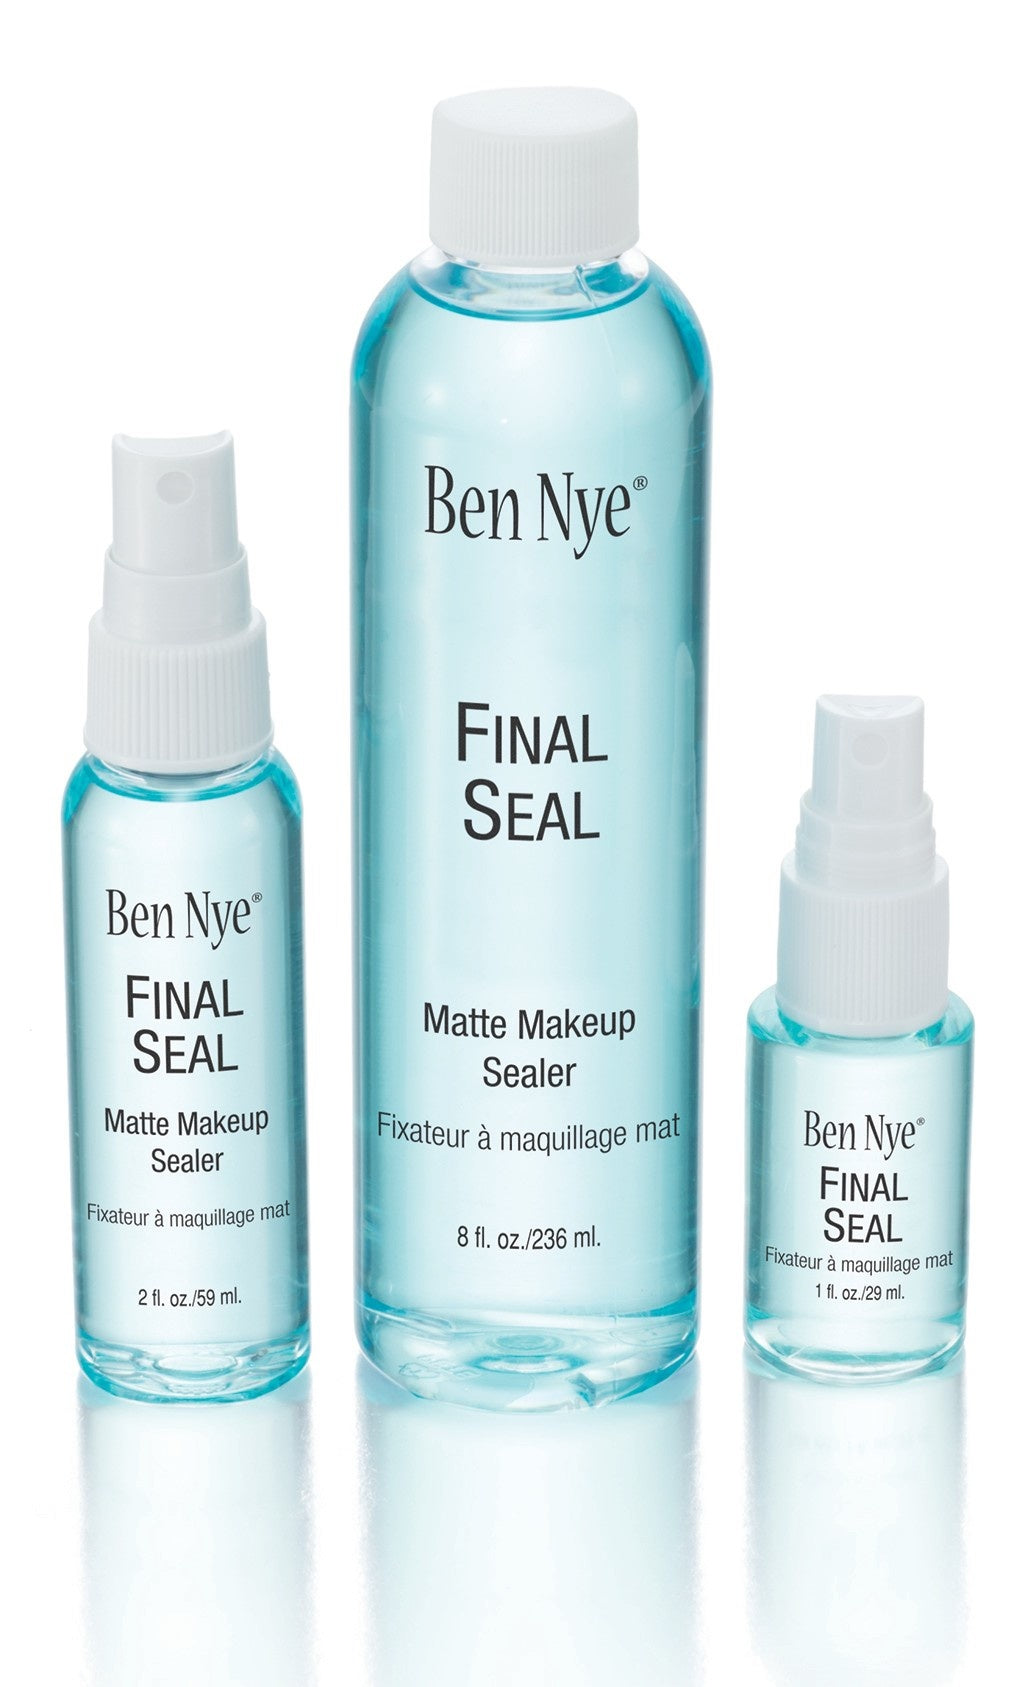  Ben Nye Final Seal 16oz. : Beauty & Personal Care